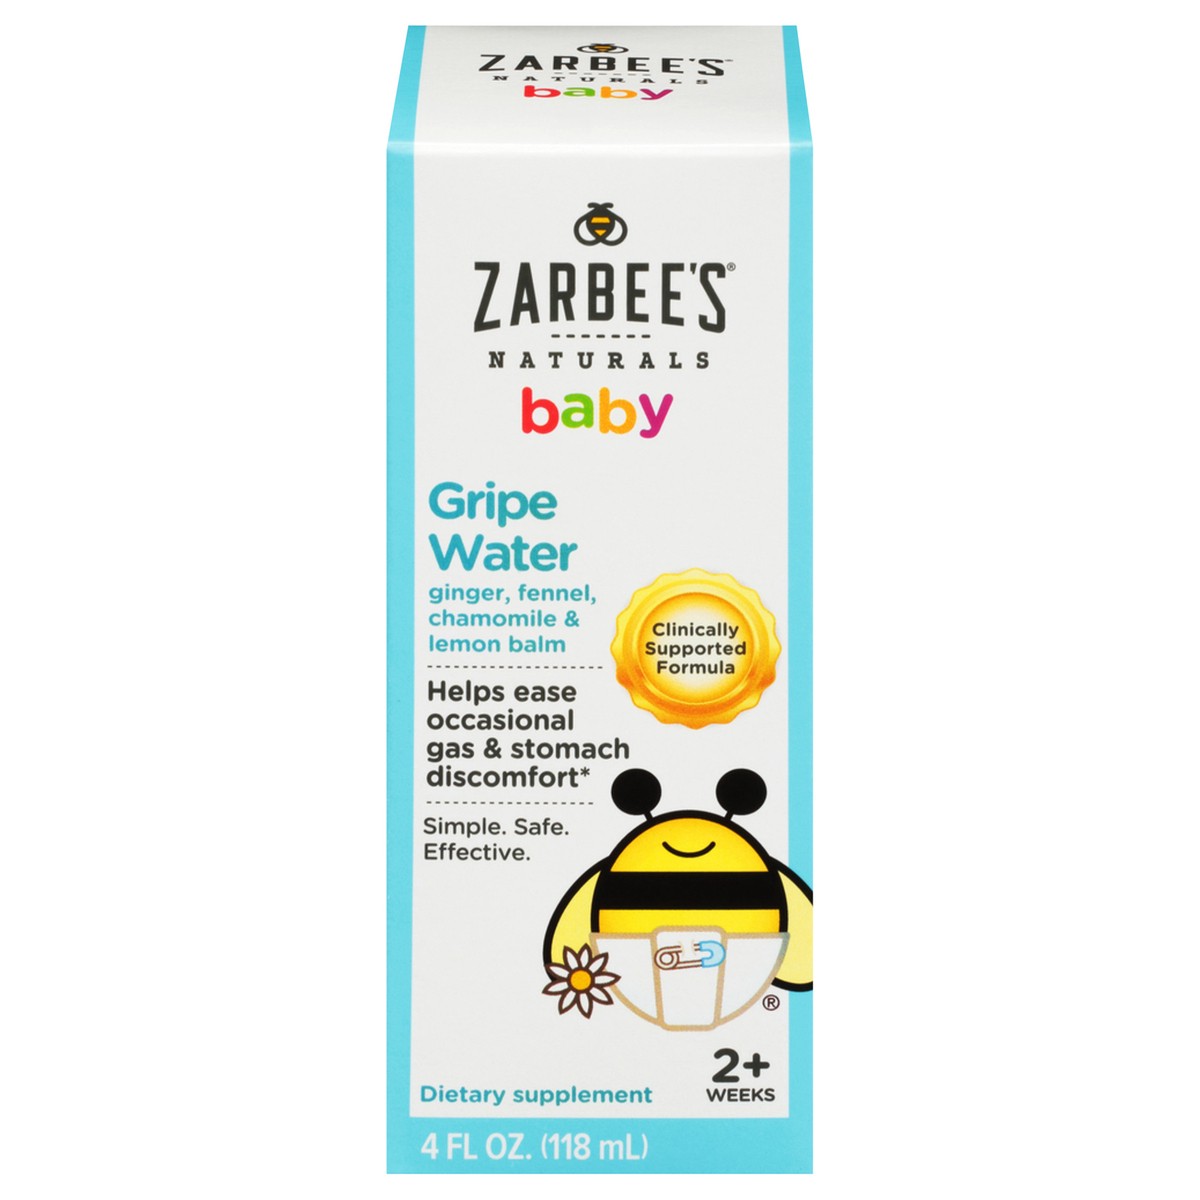 slide 8 of 11, Zarbee's Naturals Naturals Baby Gripe Water 4 oz Box, 4 fl oz